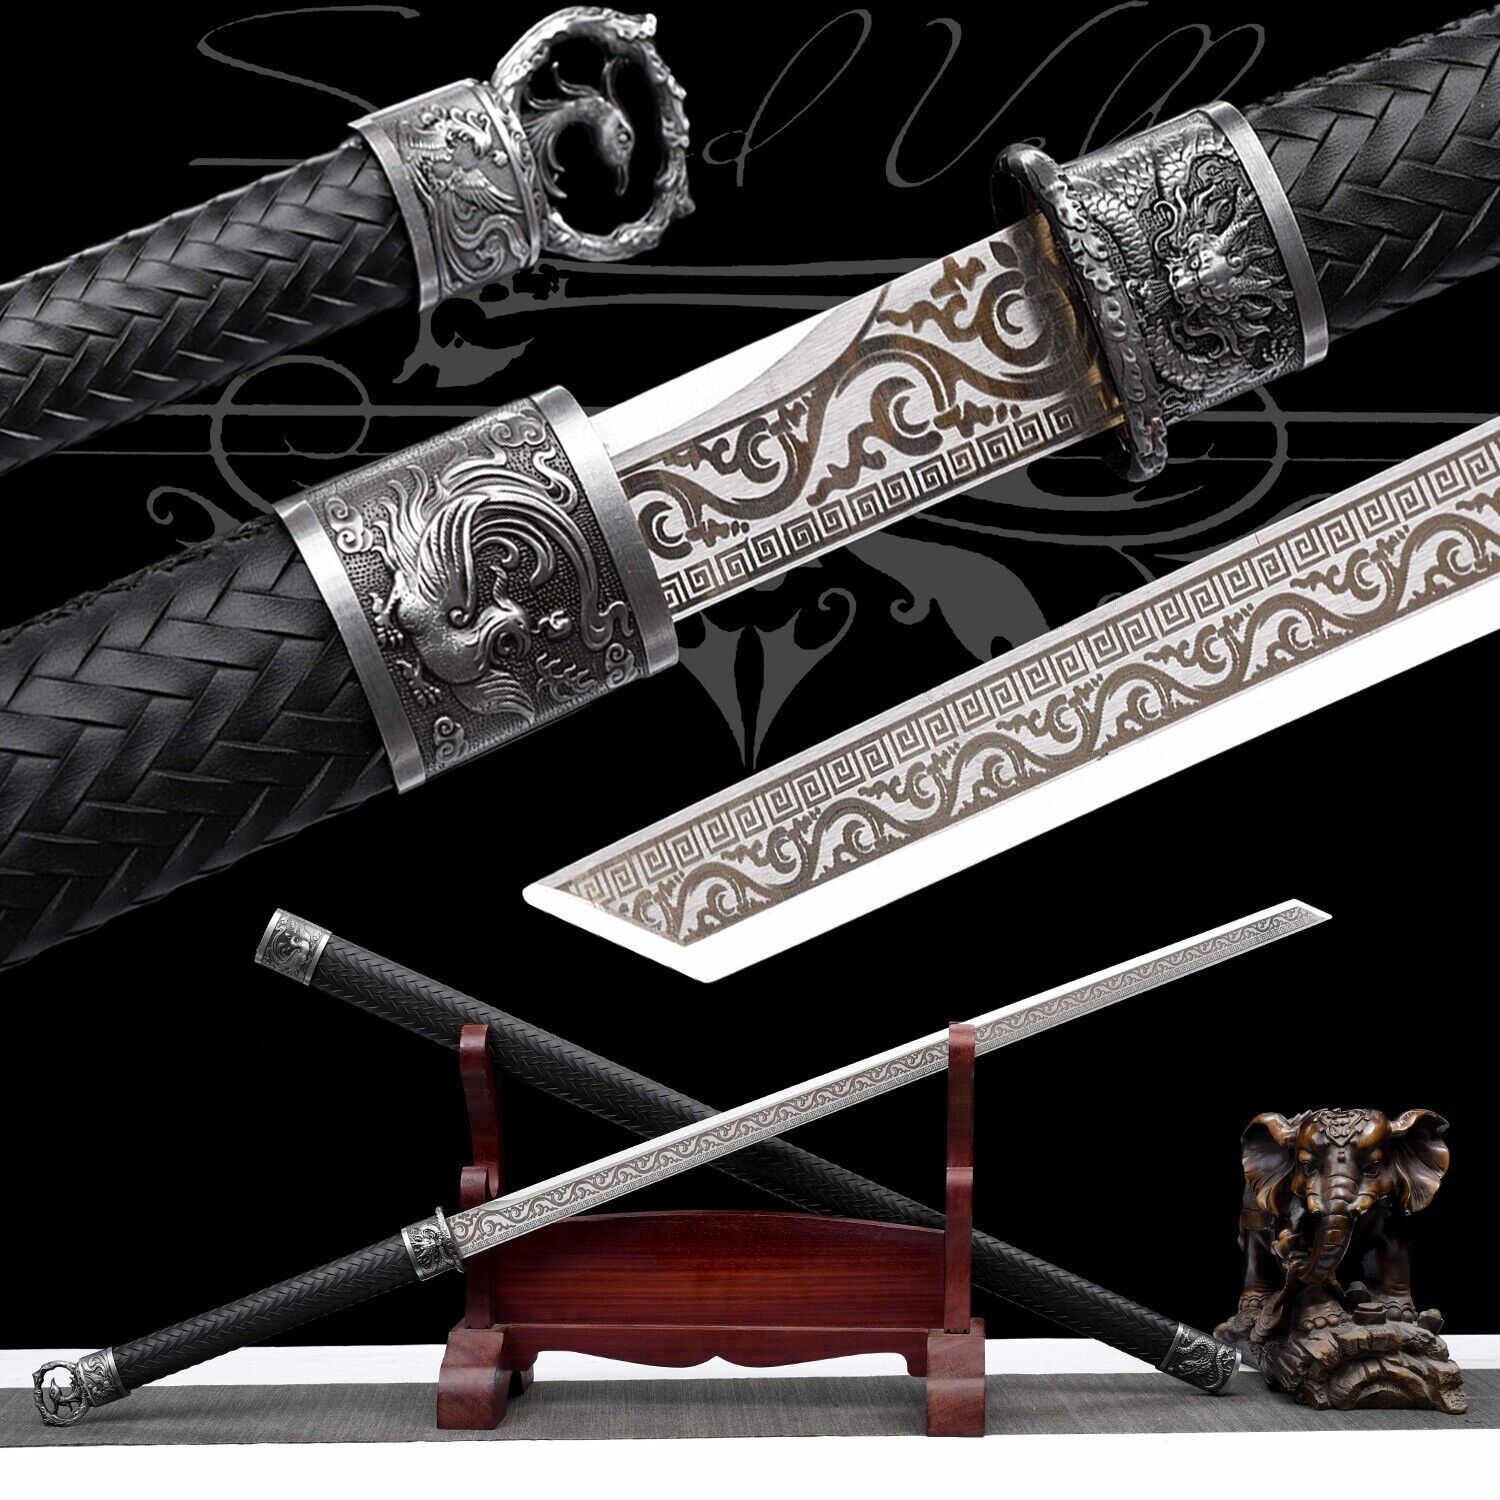 Handmade Katana/Manganese Steel/Full Tang Blade/Black/Fighting Master/Real Sword